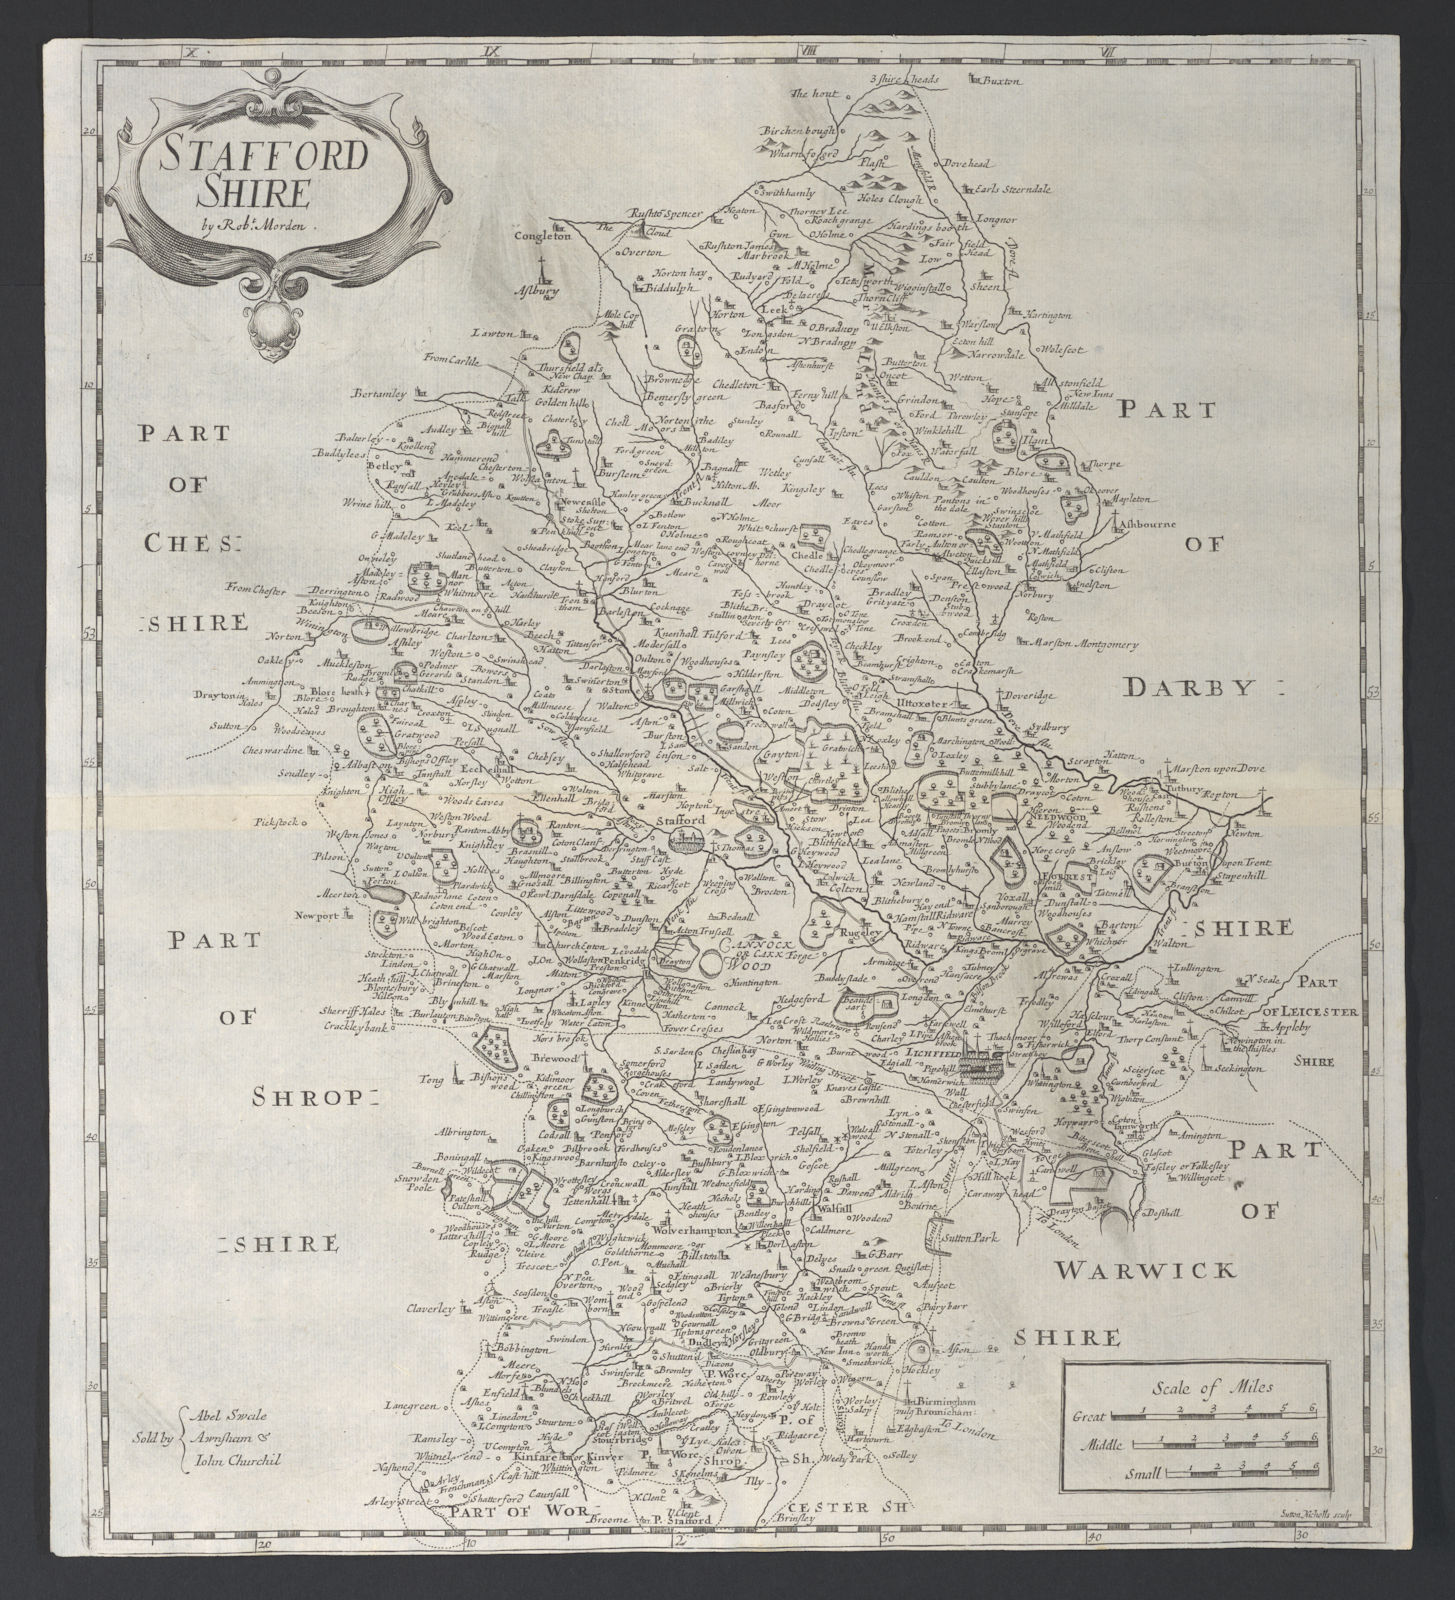 Staffordshire. 'STAFFORD SHIRE' by ROBERT MORDEN. Camden's Britannia 1695 map